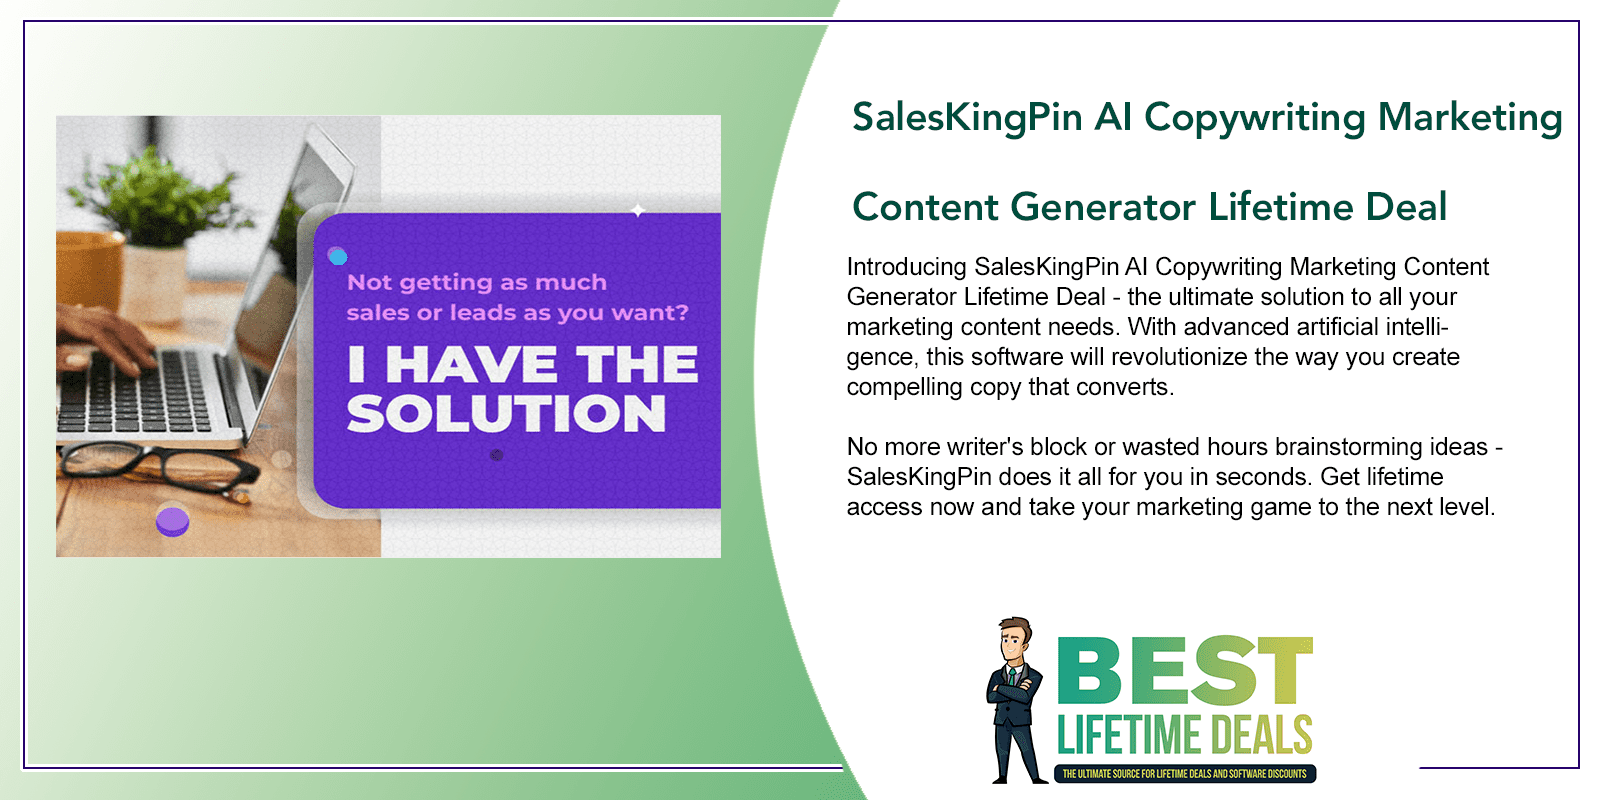 SalesKingPin AI Copywriting Marketing Content Generator Lifetime Deal Featured Image